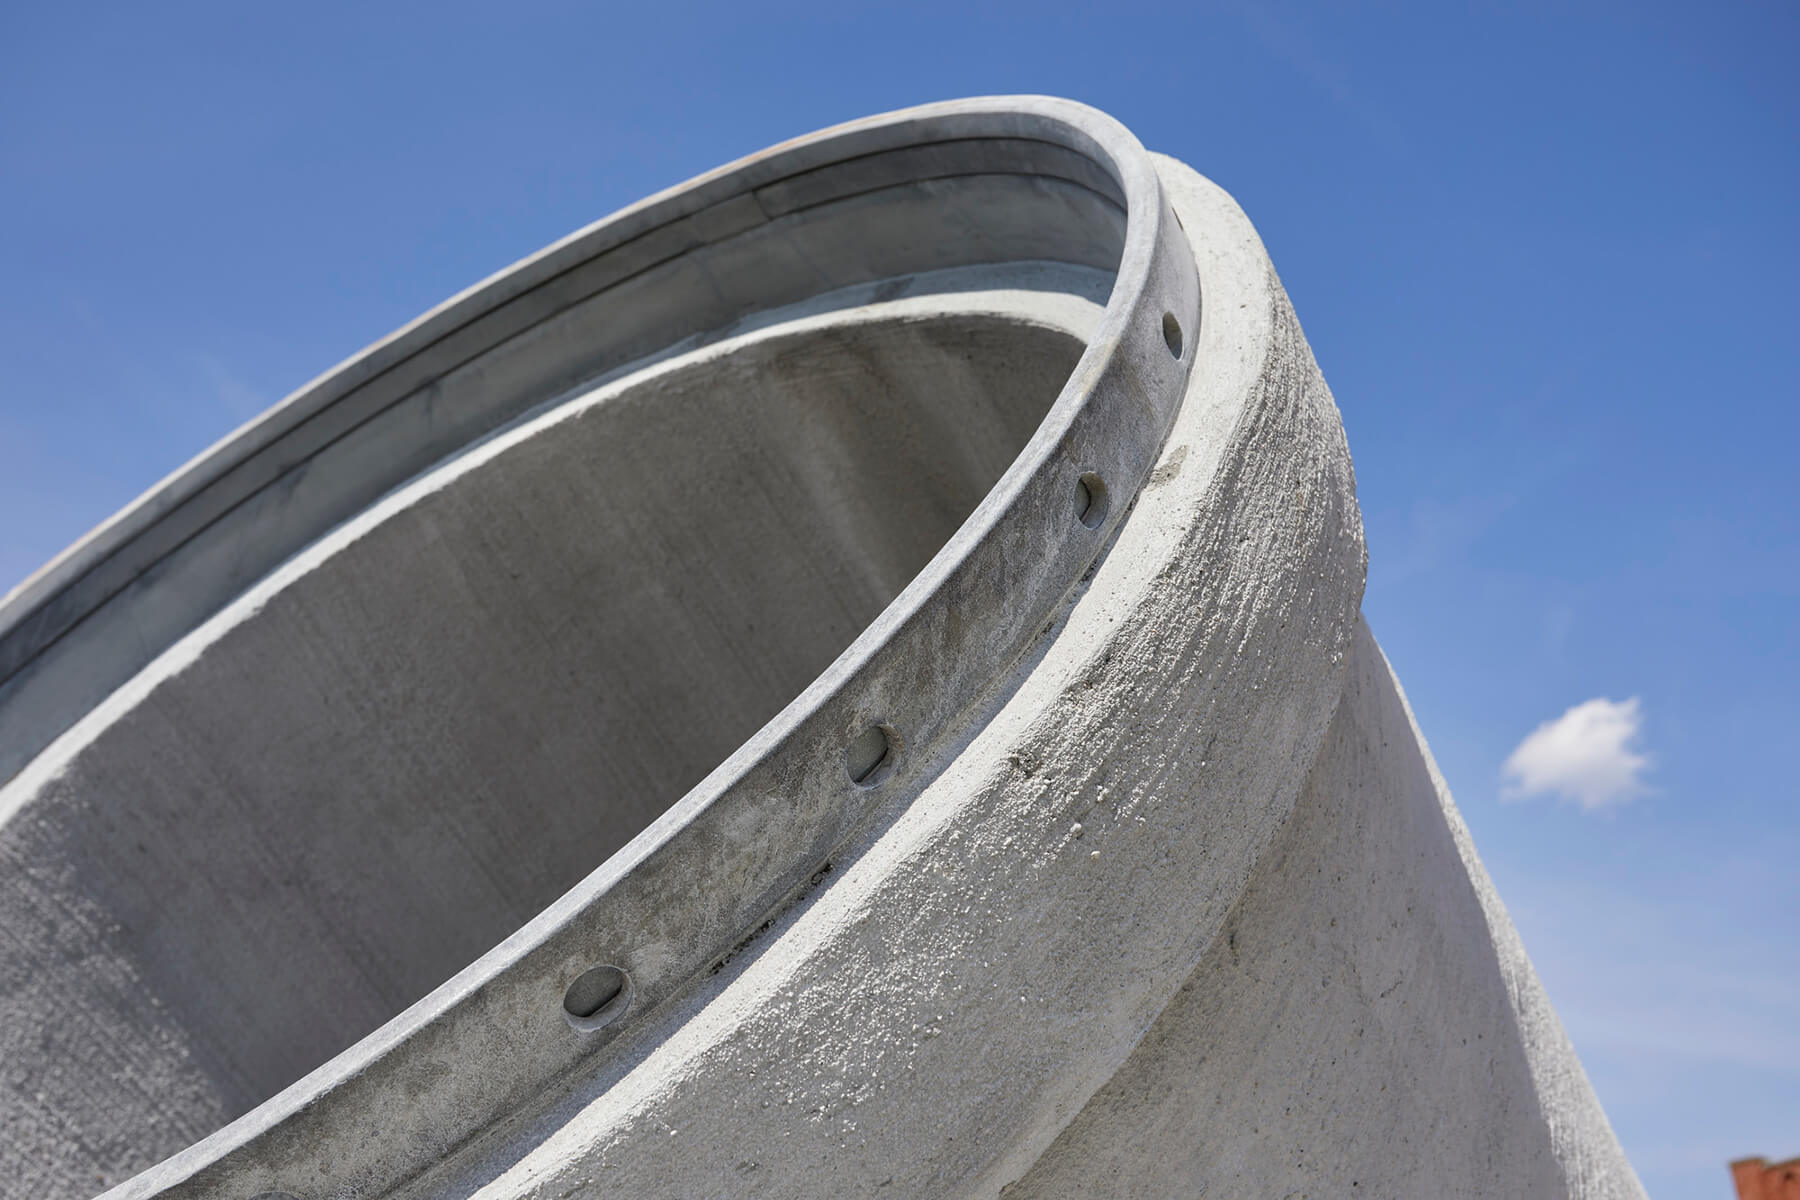 Closeup of a concrete pipe against a blue sky.